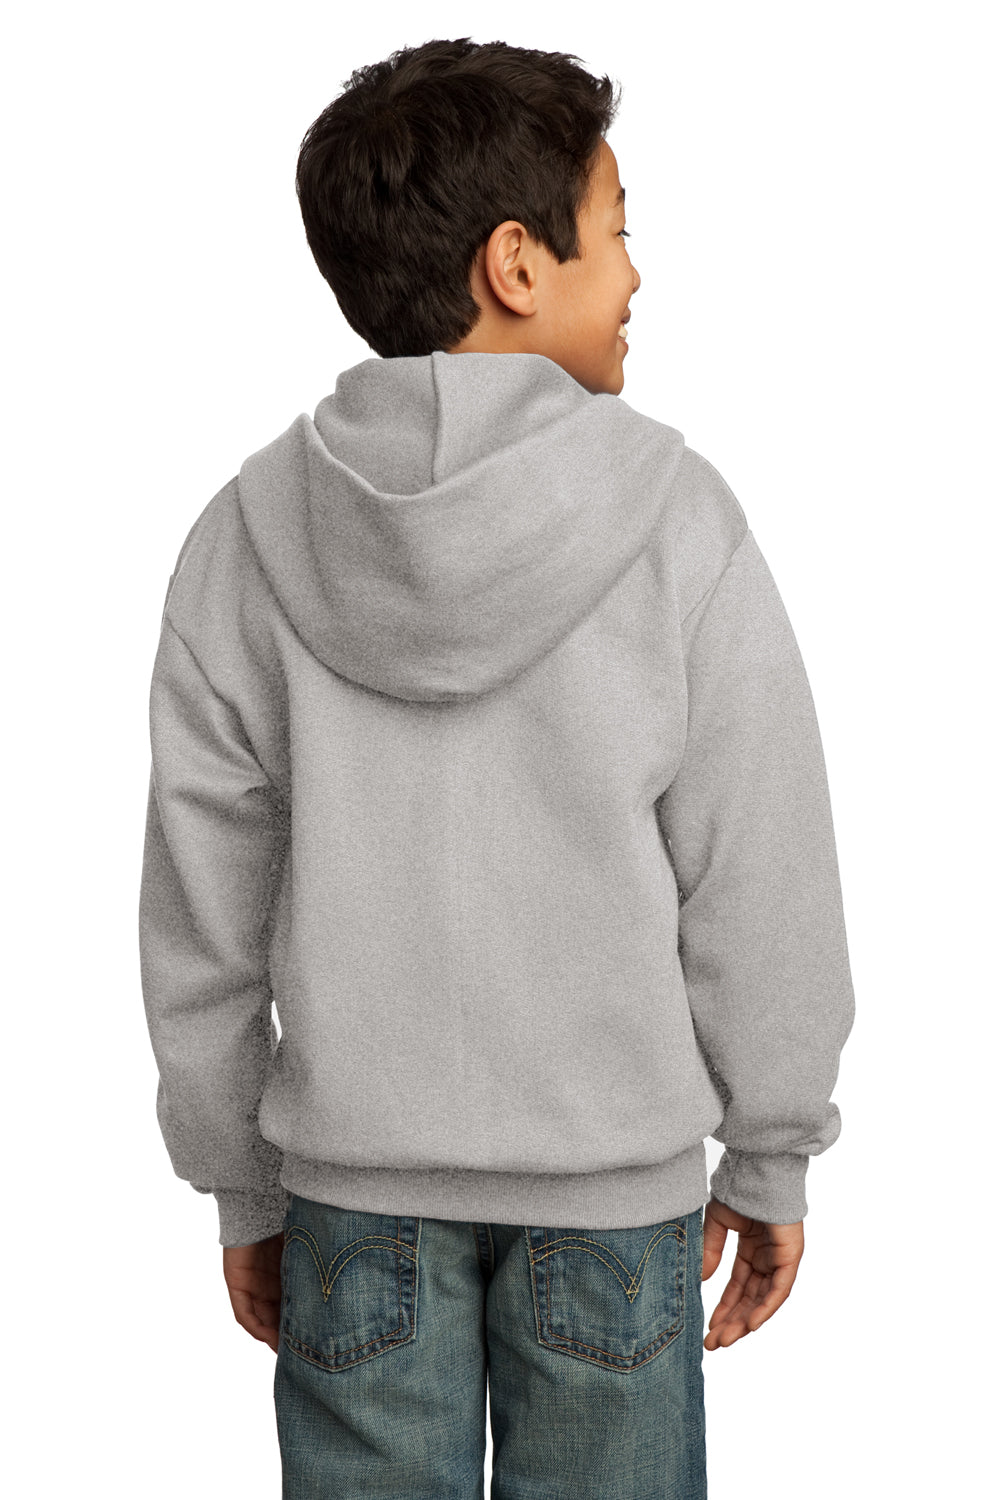 Port & Company PC90YZH Youth Core Fleece Full Zip Hooded Sweatshirt Hoodie Ash Grey Back